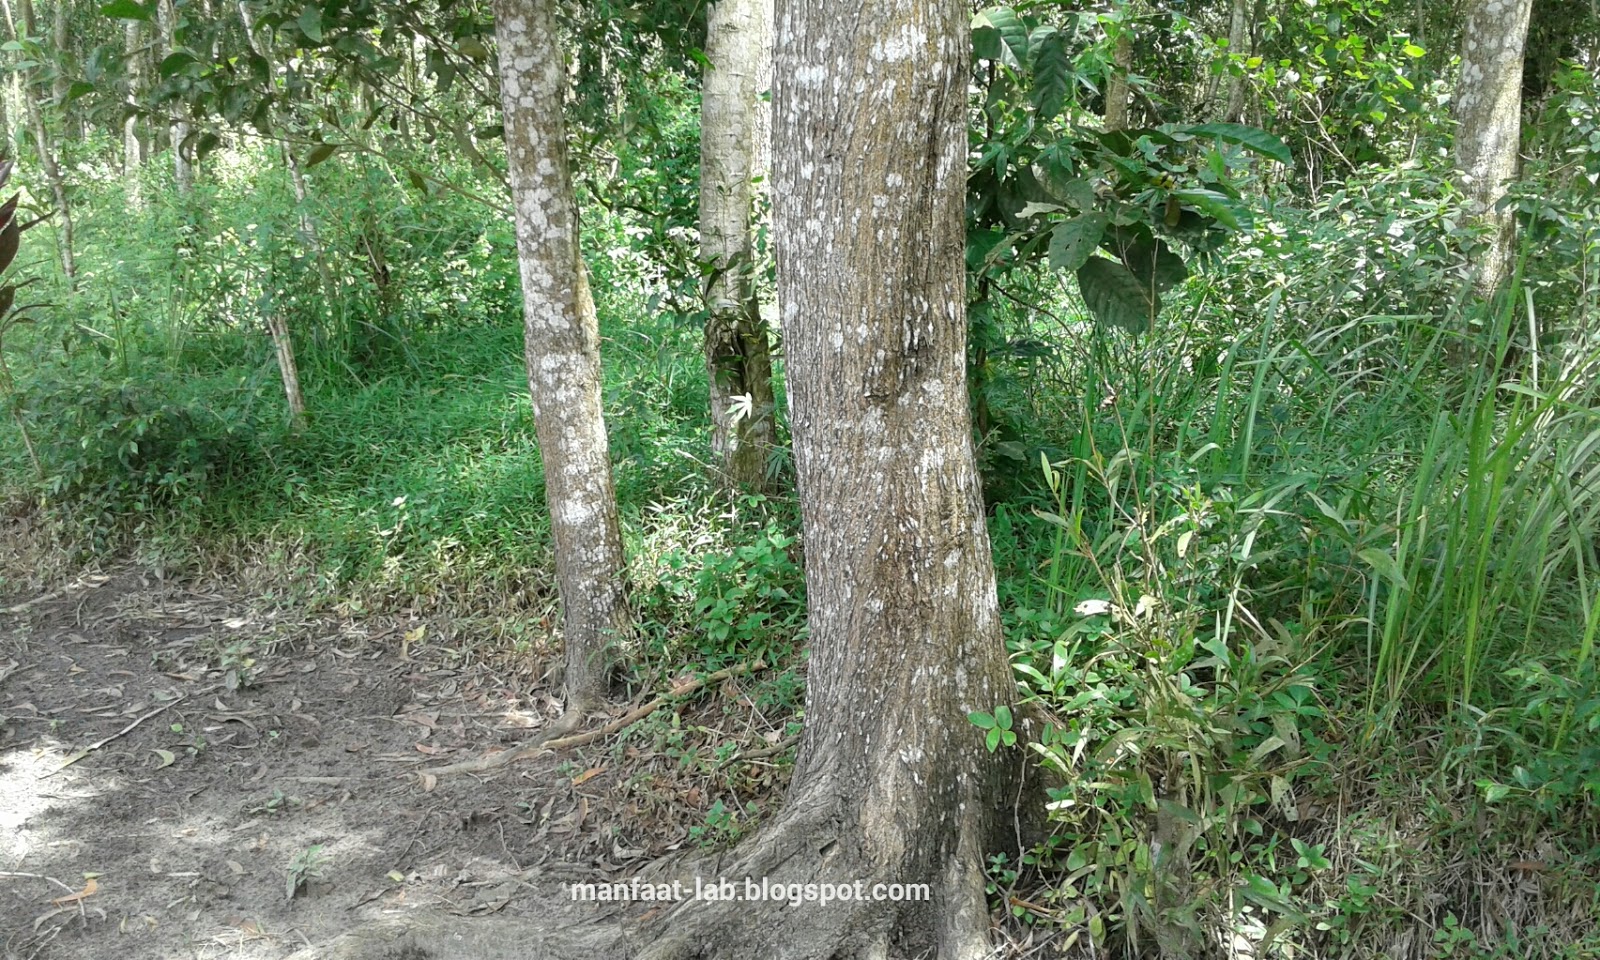  Kelebihan  pohon Akasia  liar Manfaat Lab